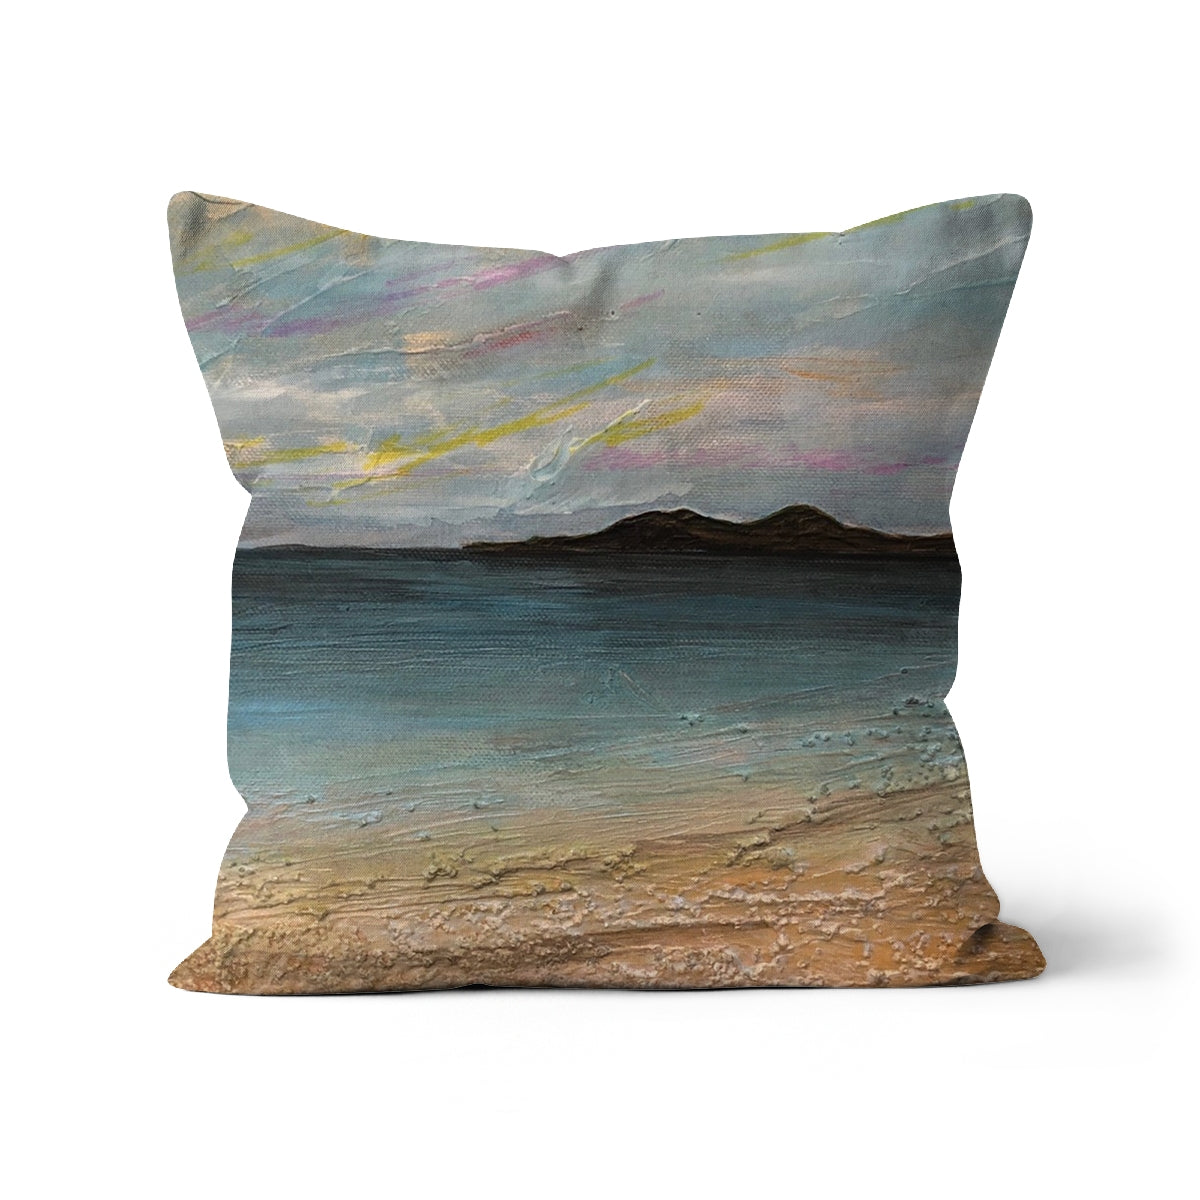 Garrynamonie Beach South Uist Art Gifts Cushion-Cushions-Hebridean Islands Art Gallery-Linen-24"x24"-Paintings, Prints, Homeware, Art Gifts From Scotland By Scottish Artist Kevin Hunter